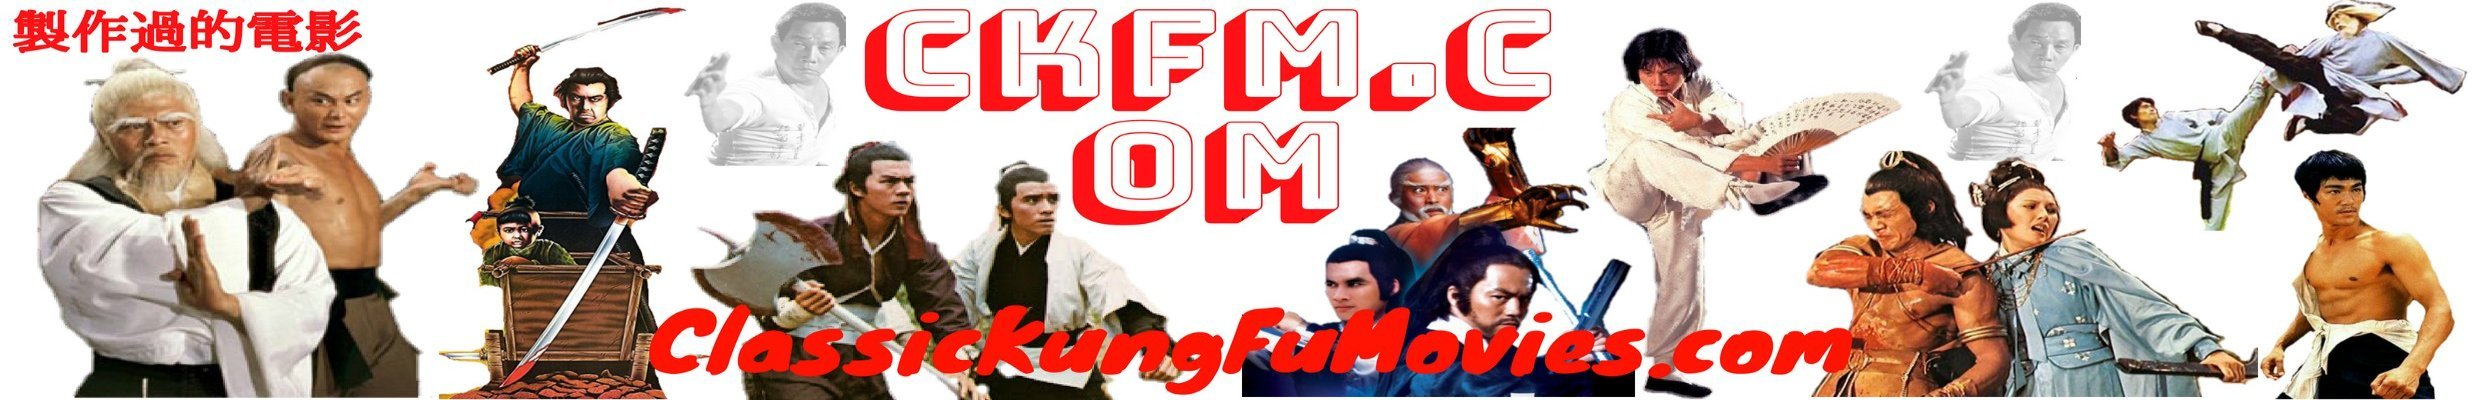 Classic Kung Fu Movies